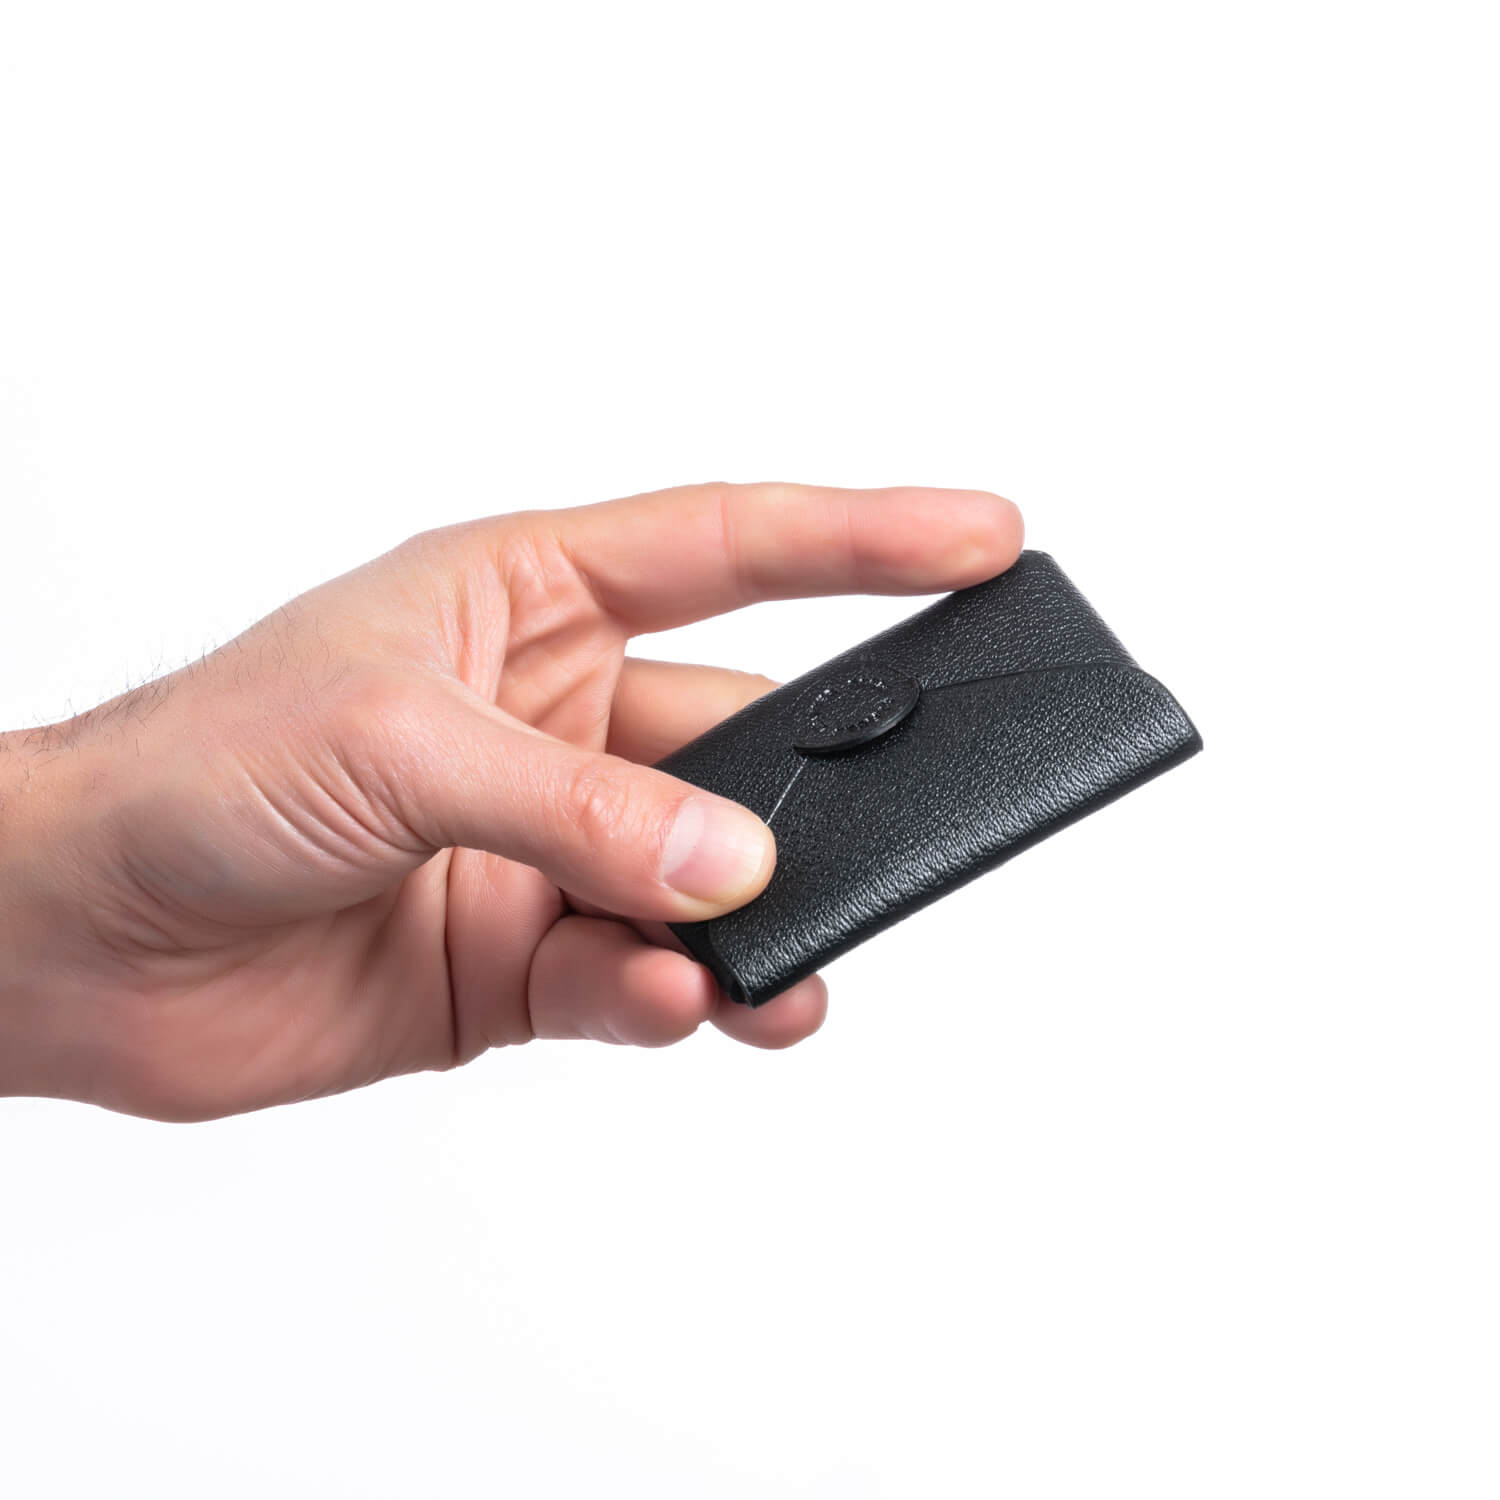 Serel's Exclusive Credit Card Holder Wallet at your fingertips